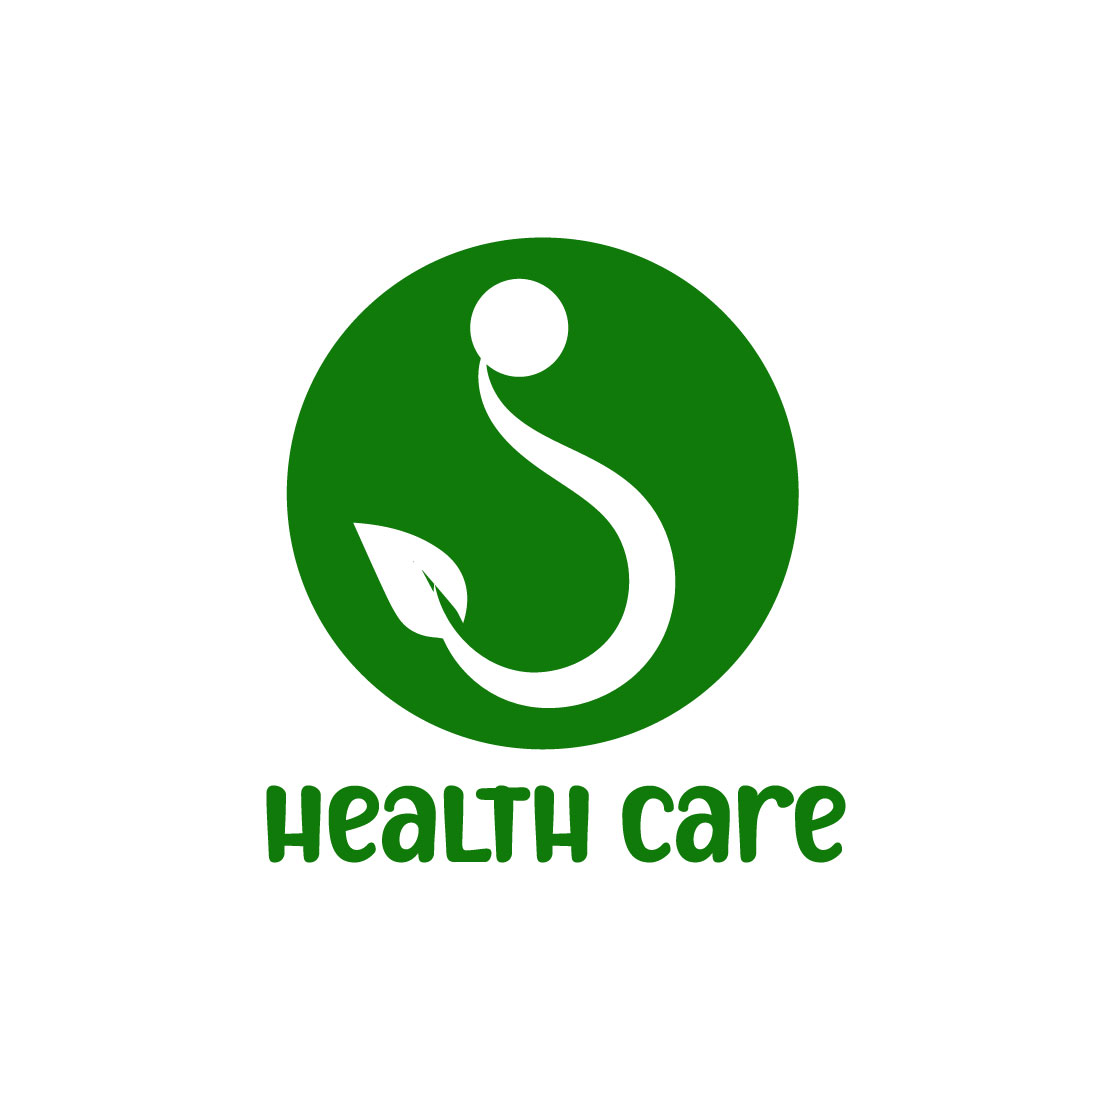 Free wellness Logo preview image.